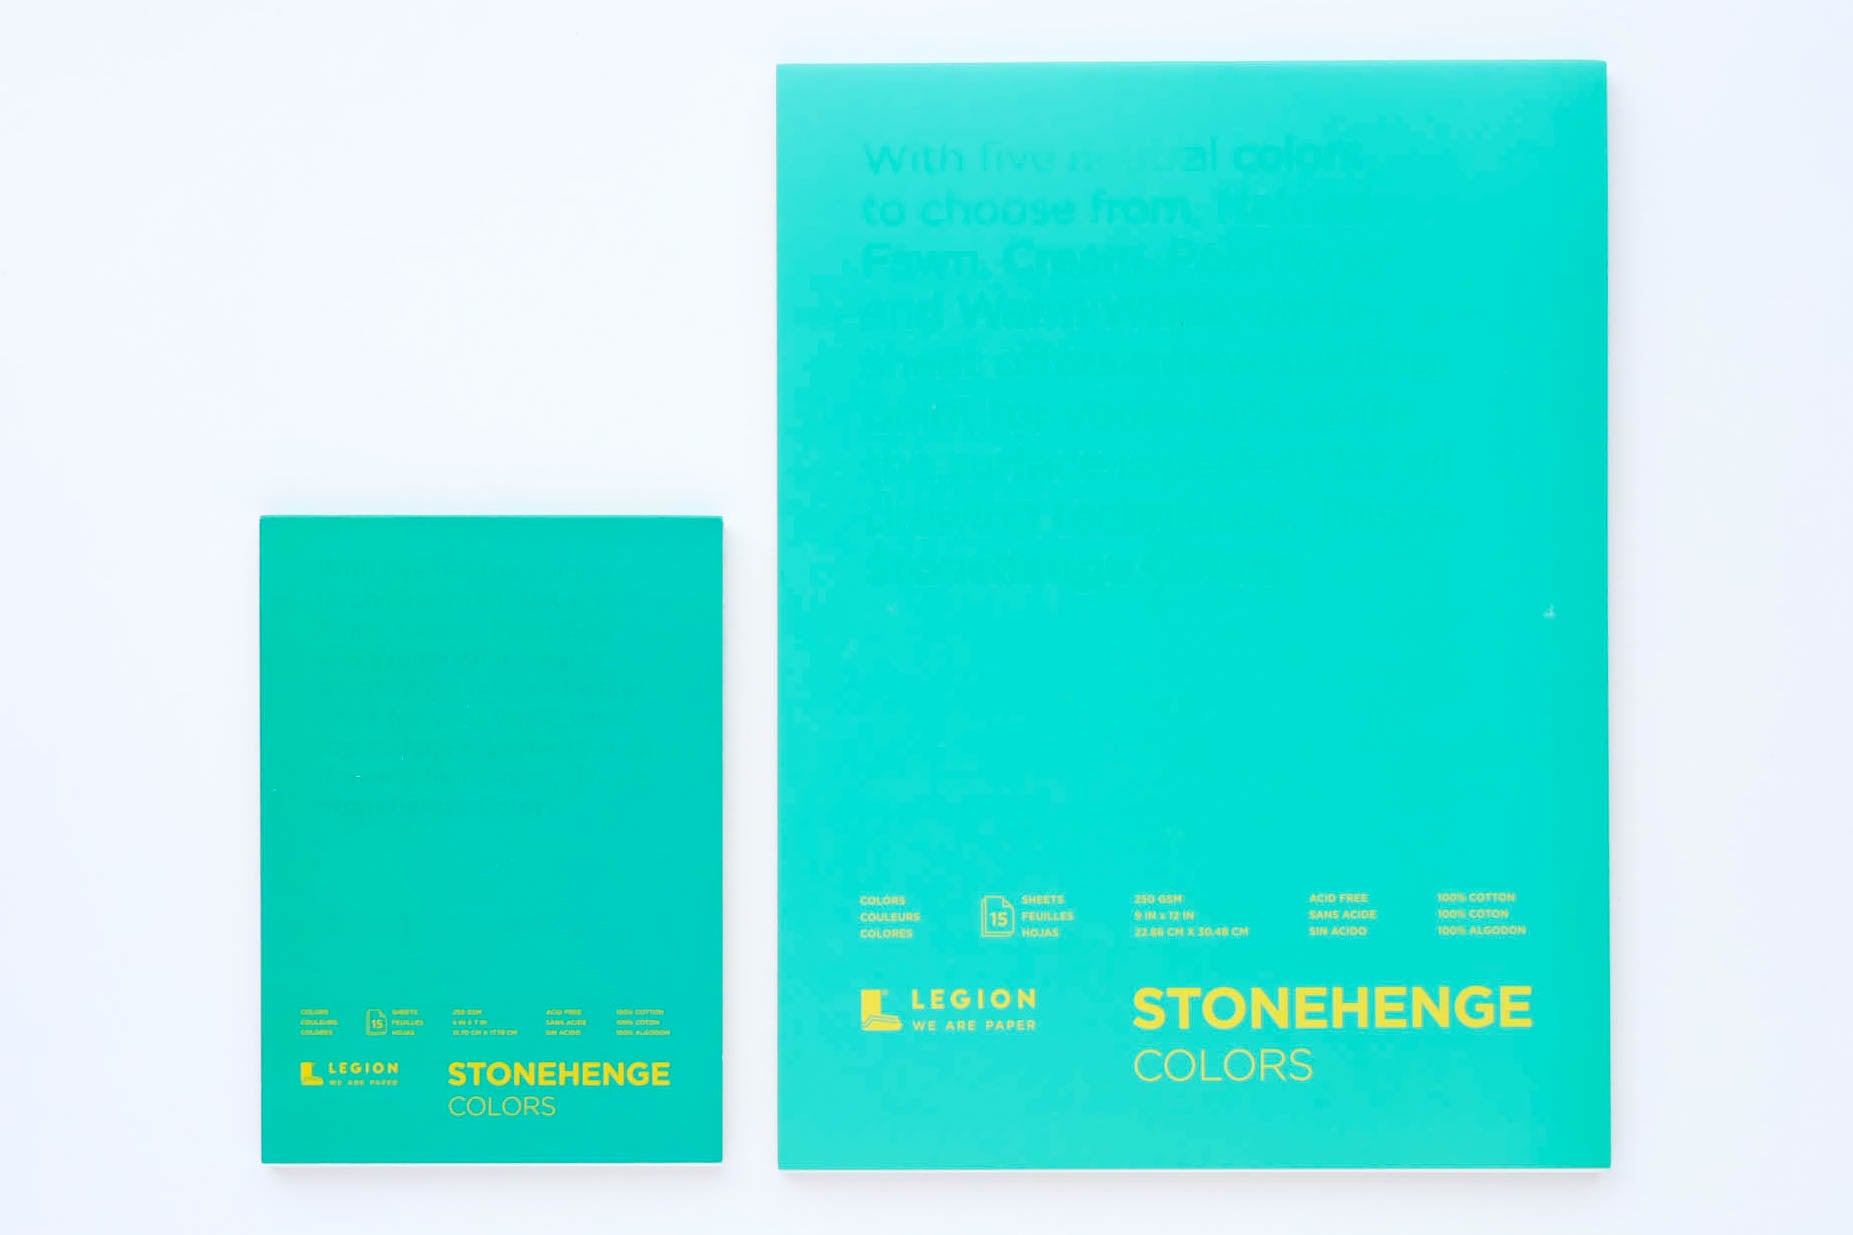 Stonehenge Fine Drawing & Printmaking Paper Pads - Legion